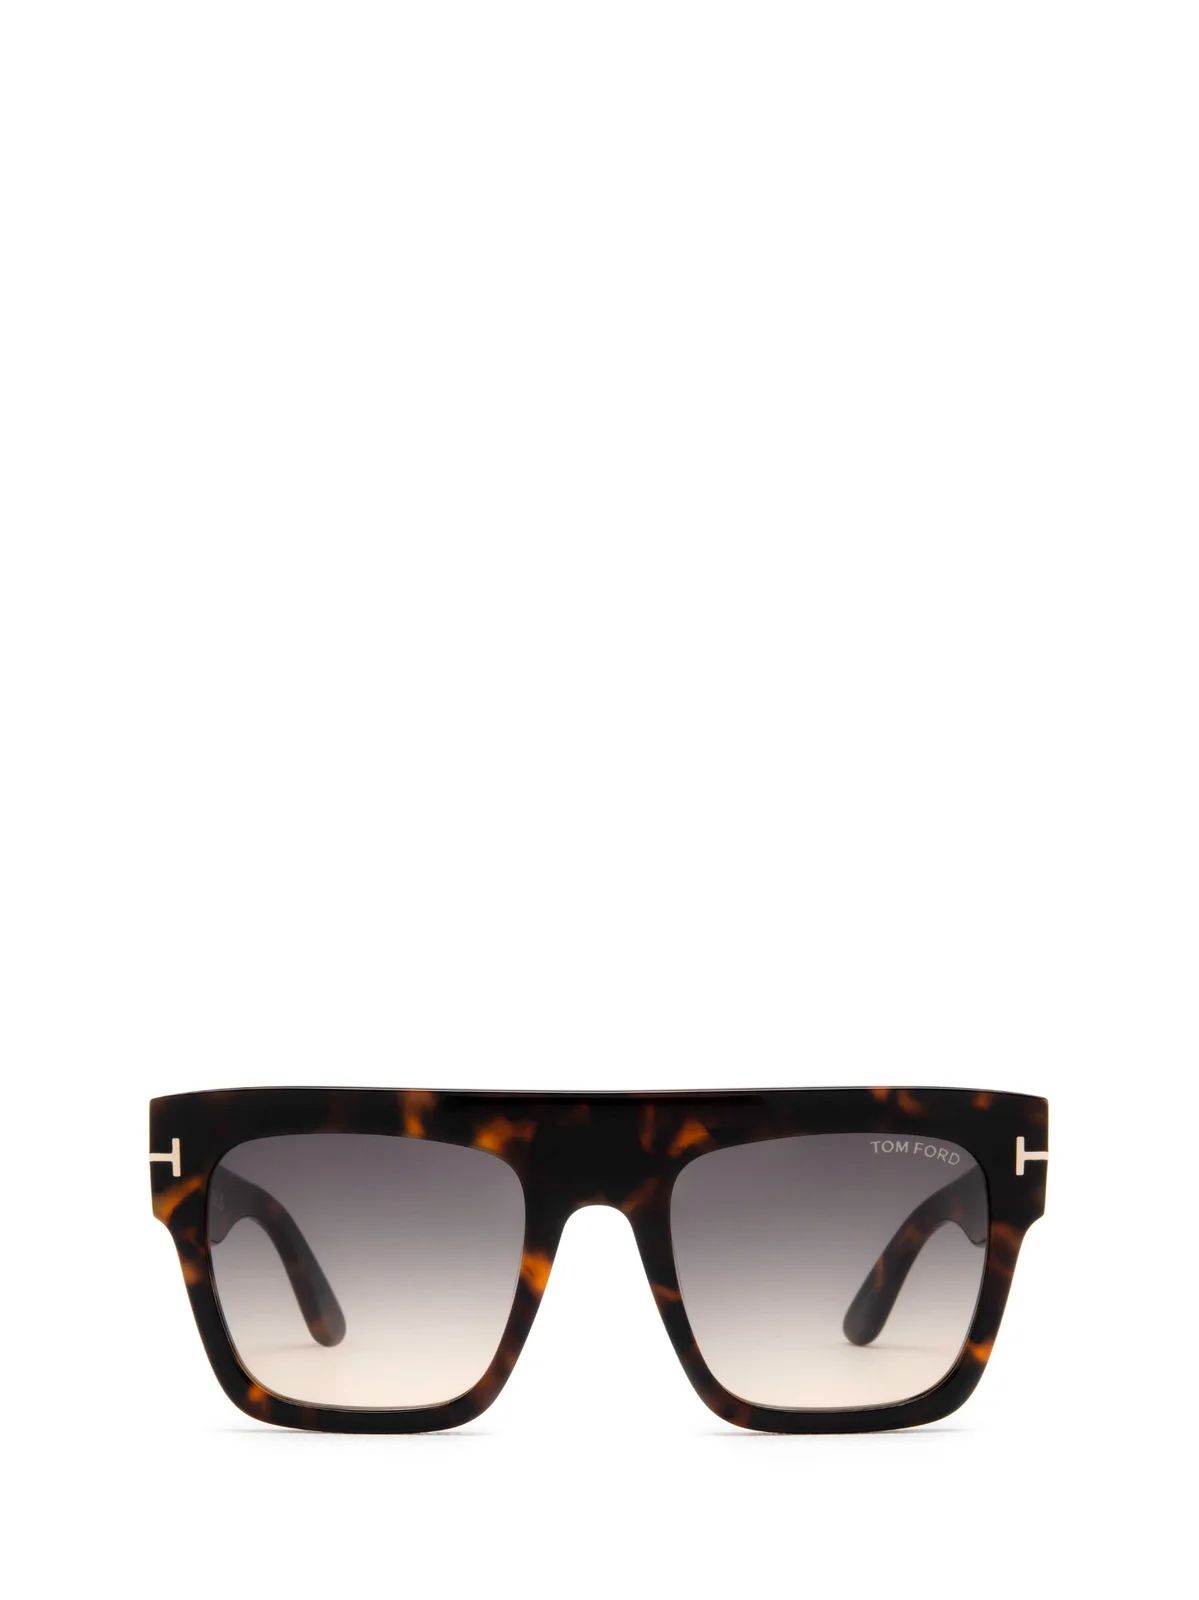 Tom Ford Eyewear Renee Square-Frame Sunglasses | Cettire Global